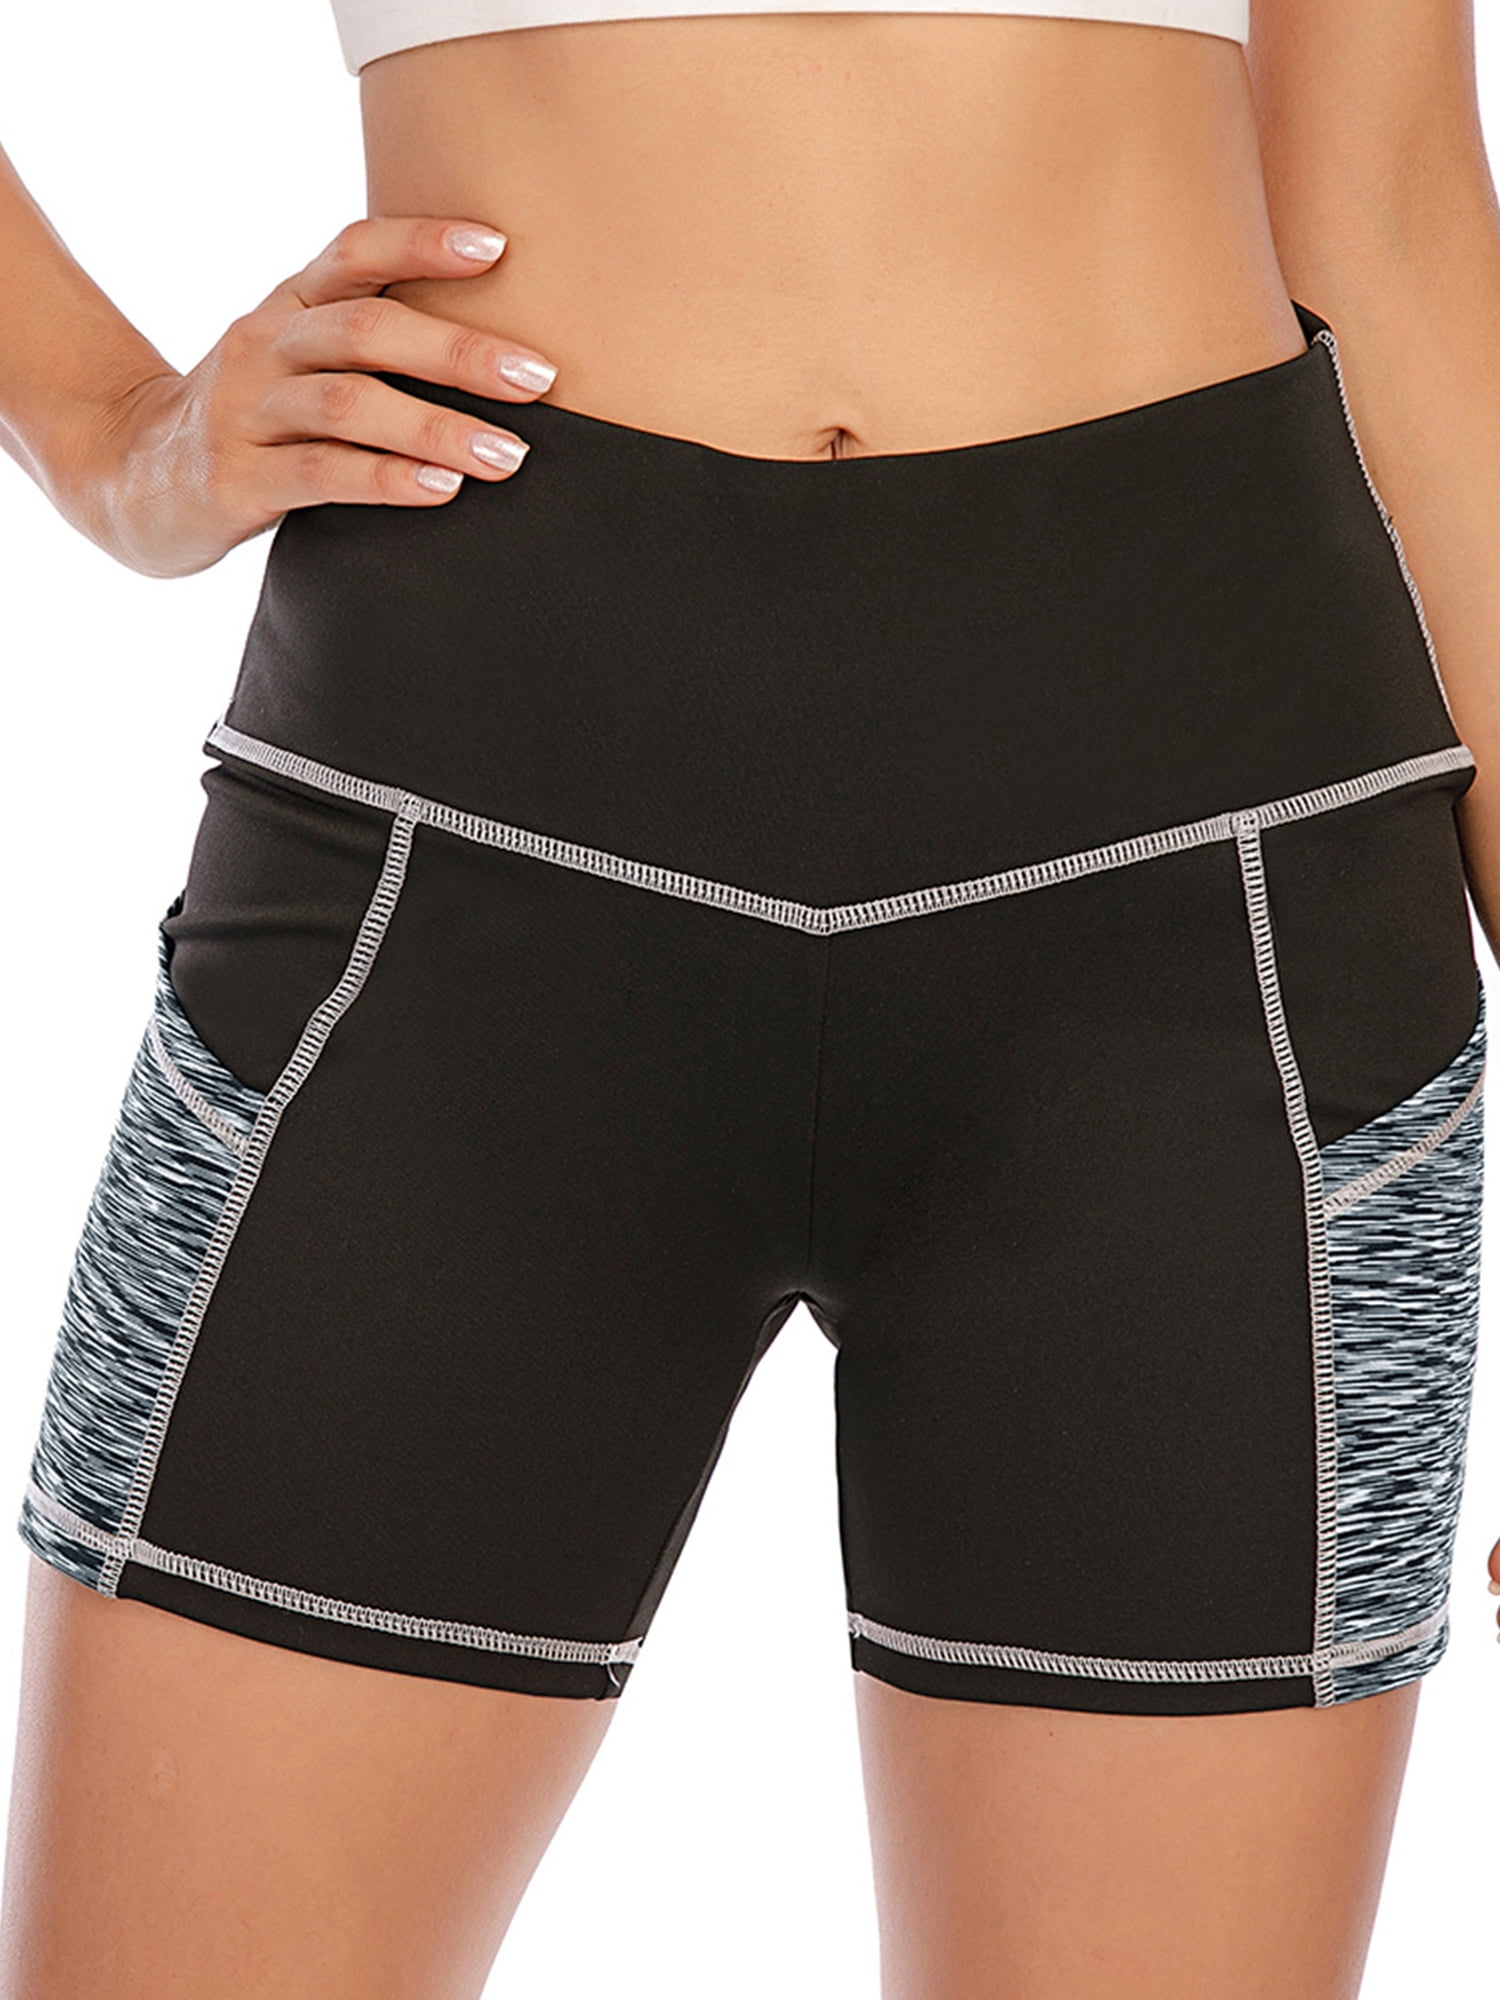 IUGA Yoga Shorts for Women Workout Gym Shorts Tummy Control